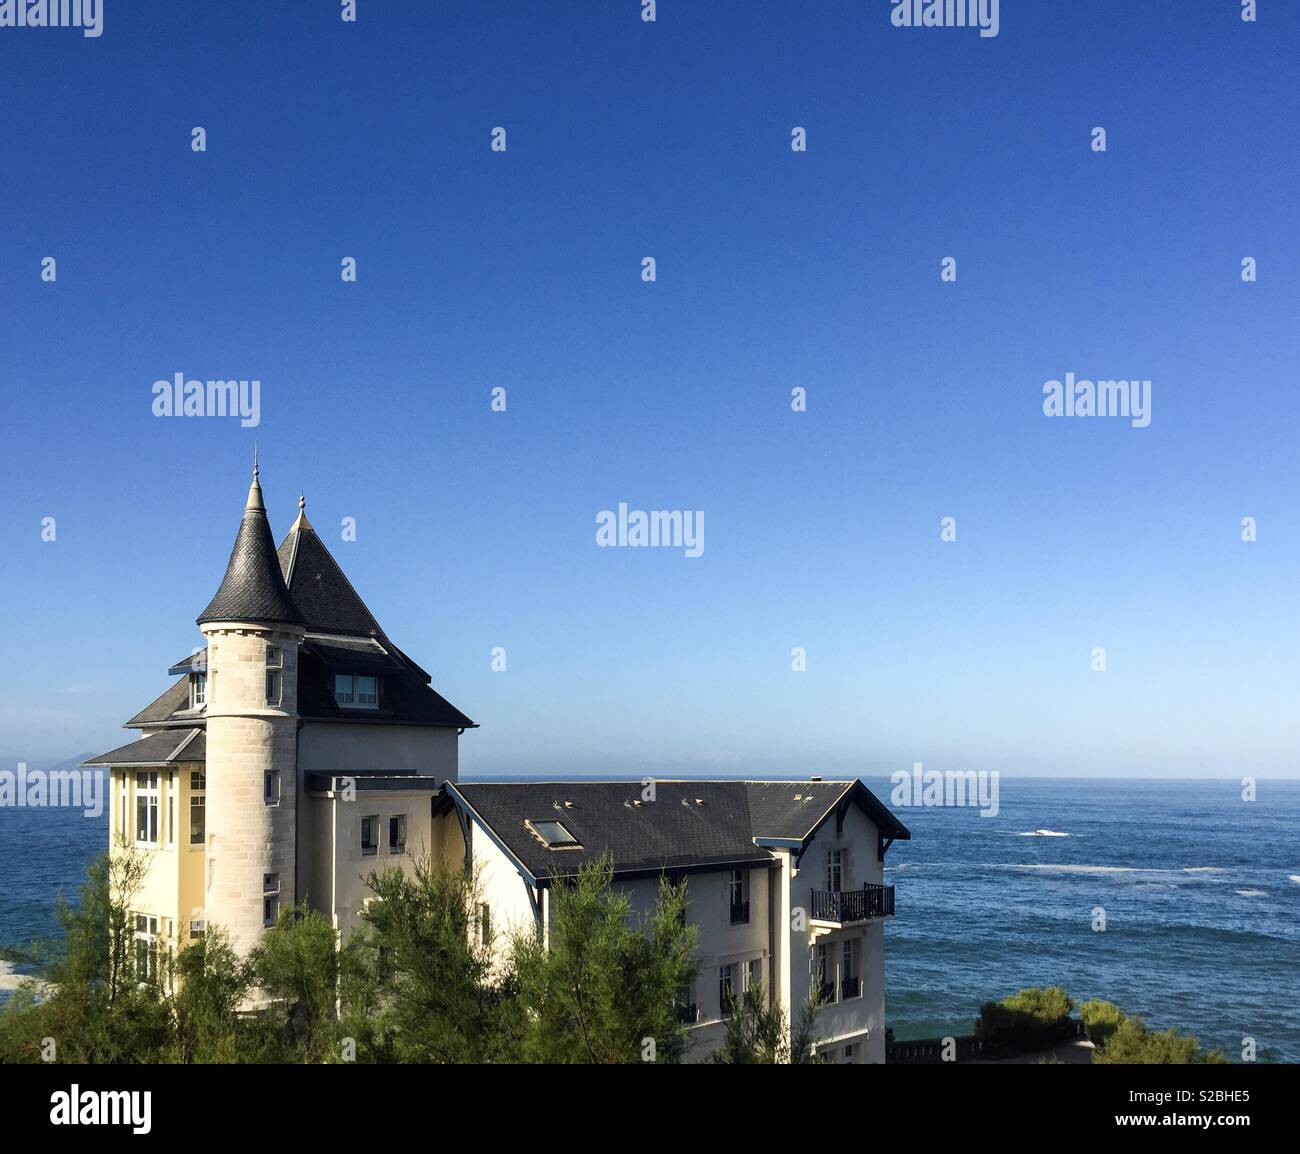 Villa Belza on the coast, Biarritz, France. Stock Photo